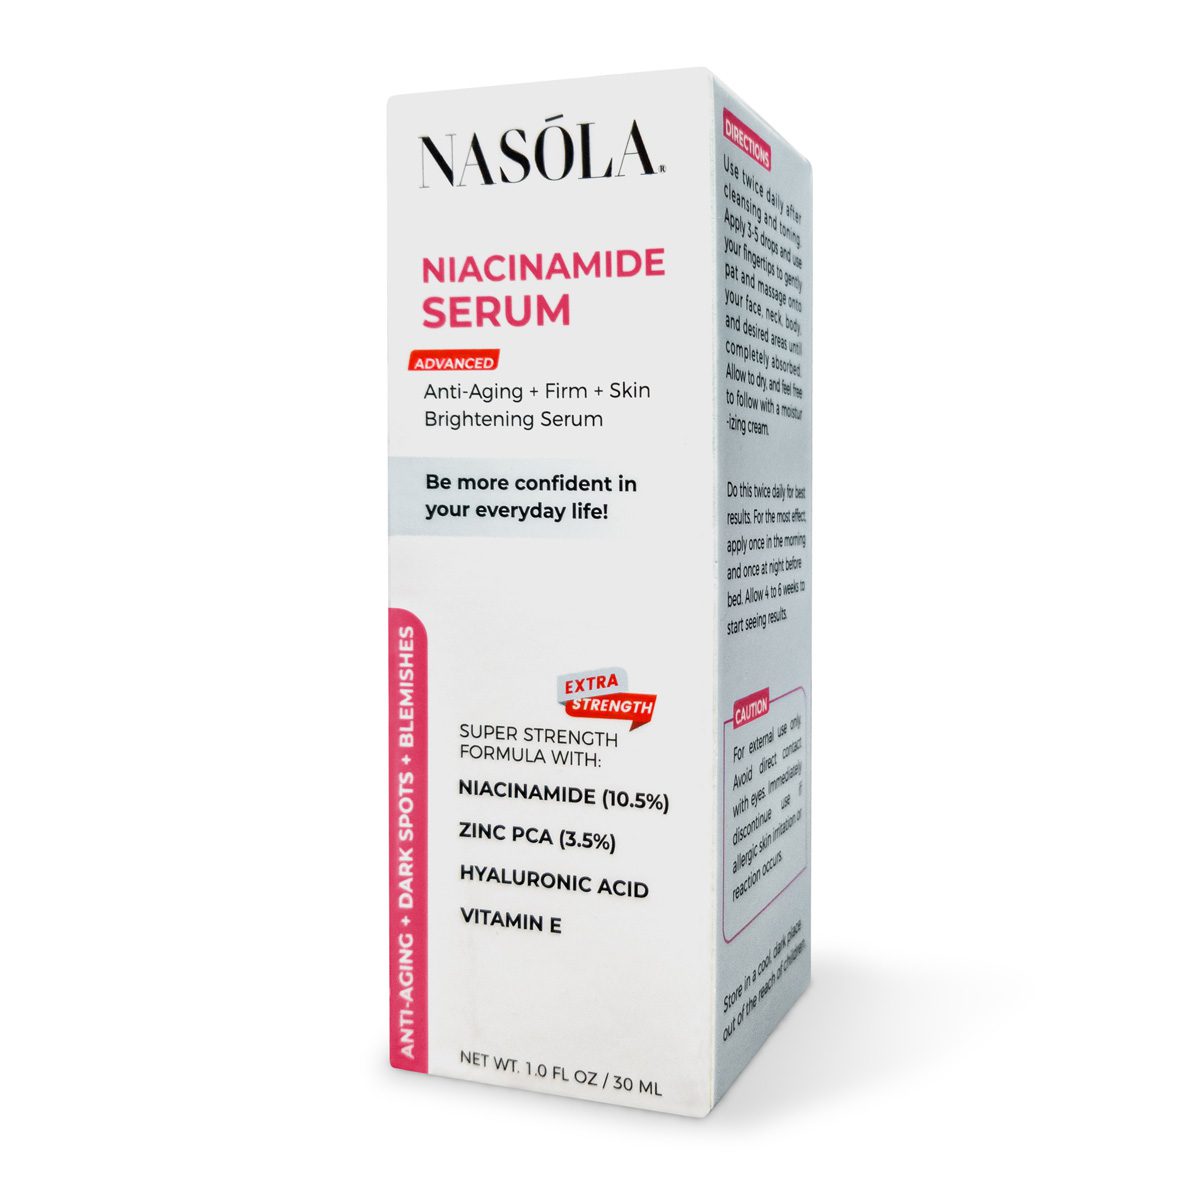 Nasola Niacinamide Serum